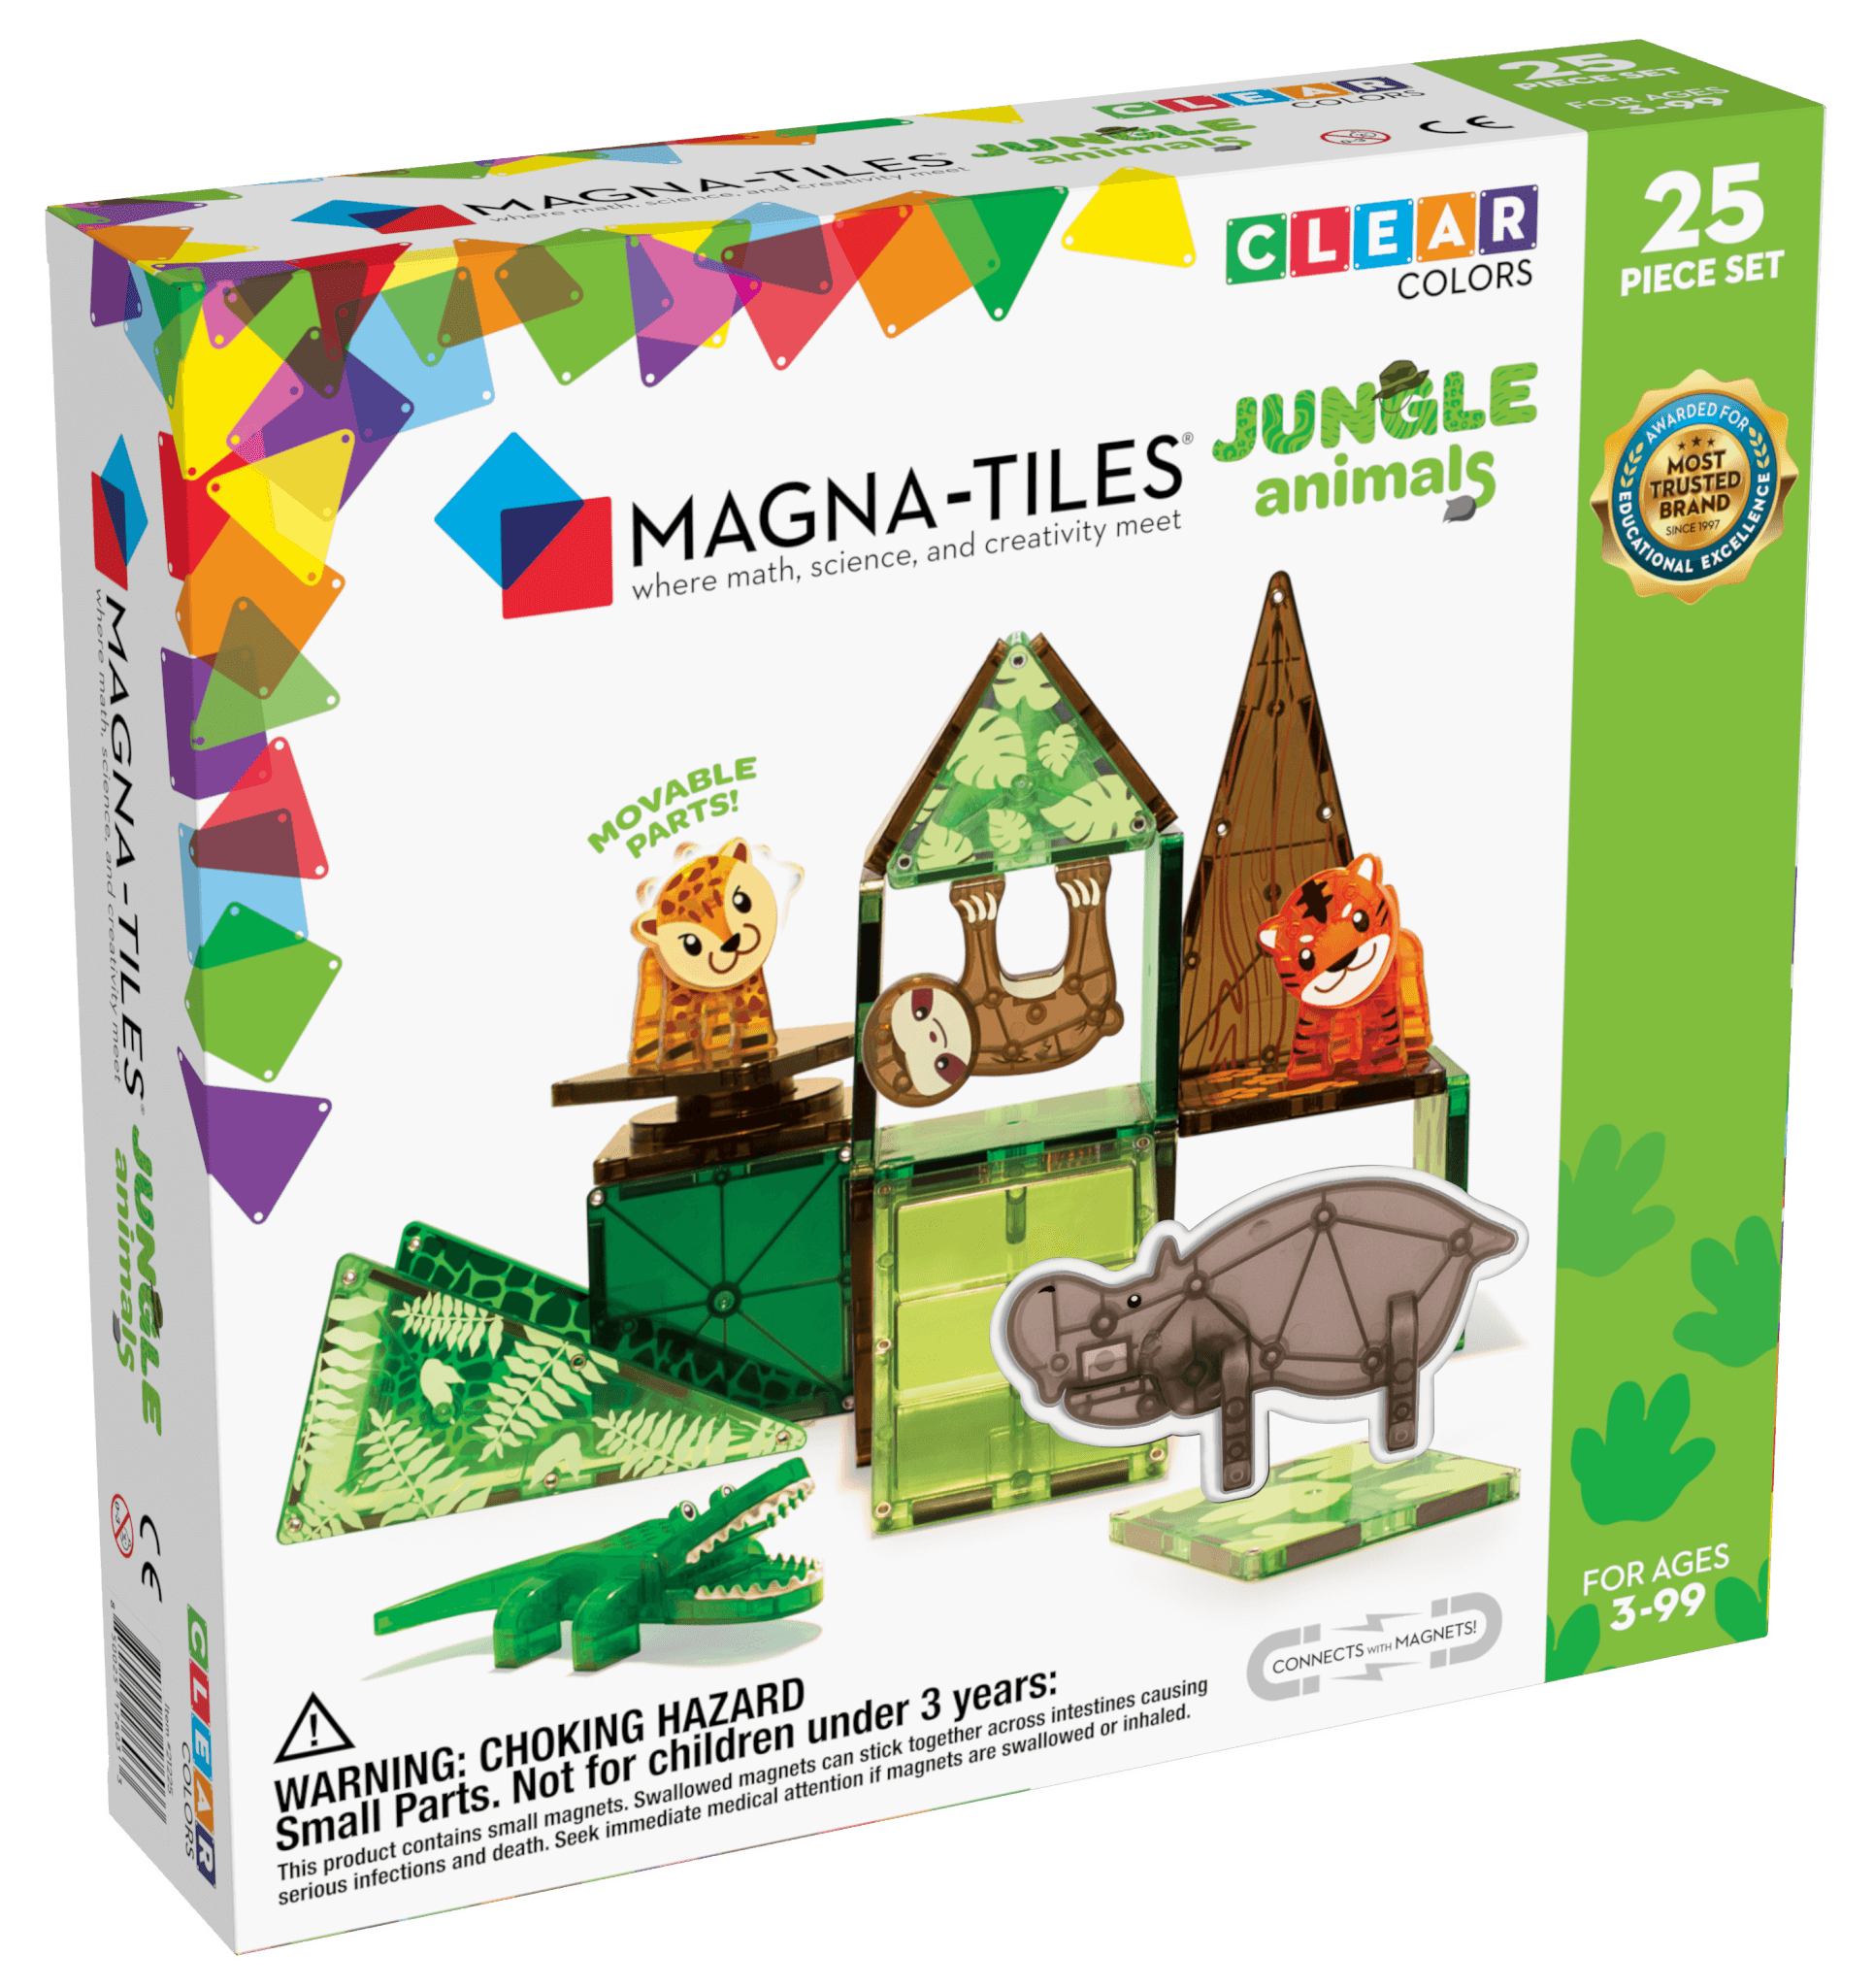 magna-tiles jungle animals